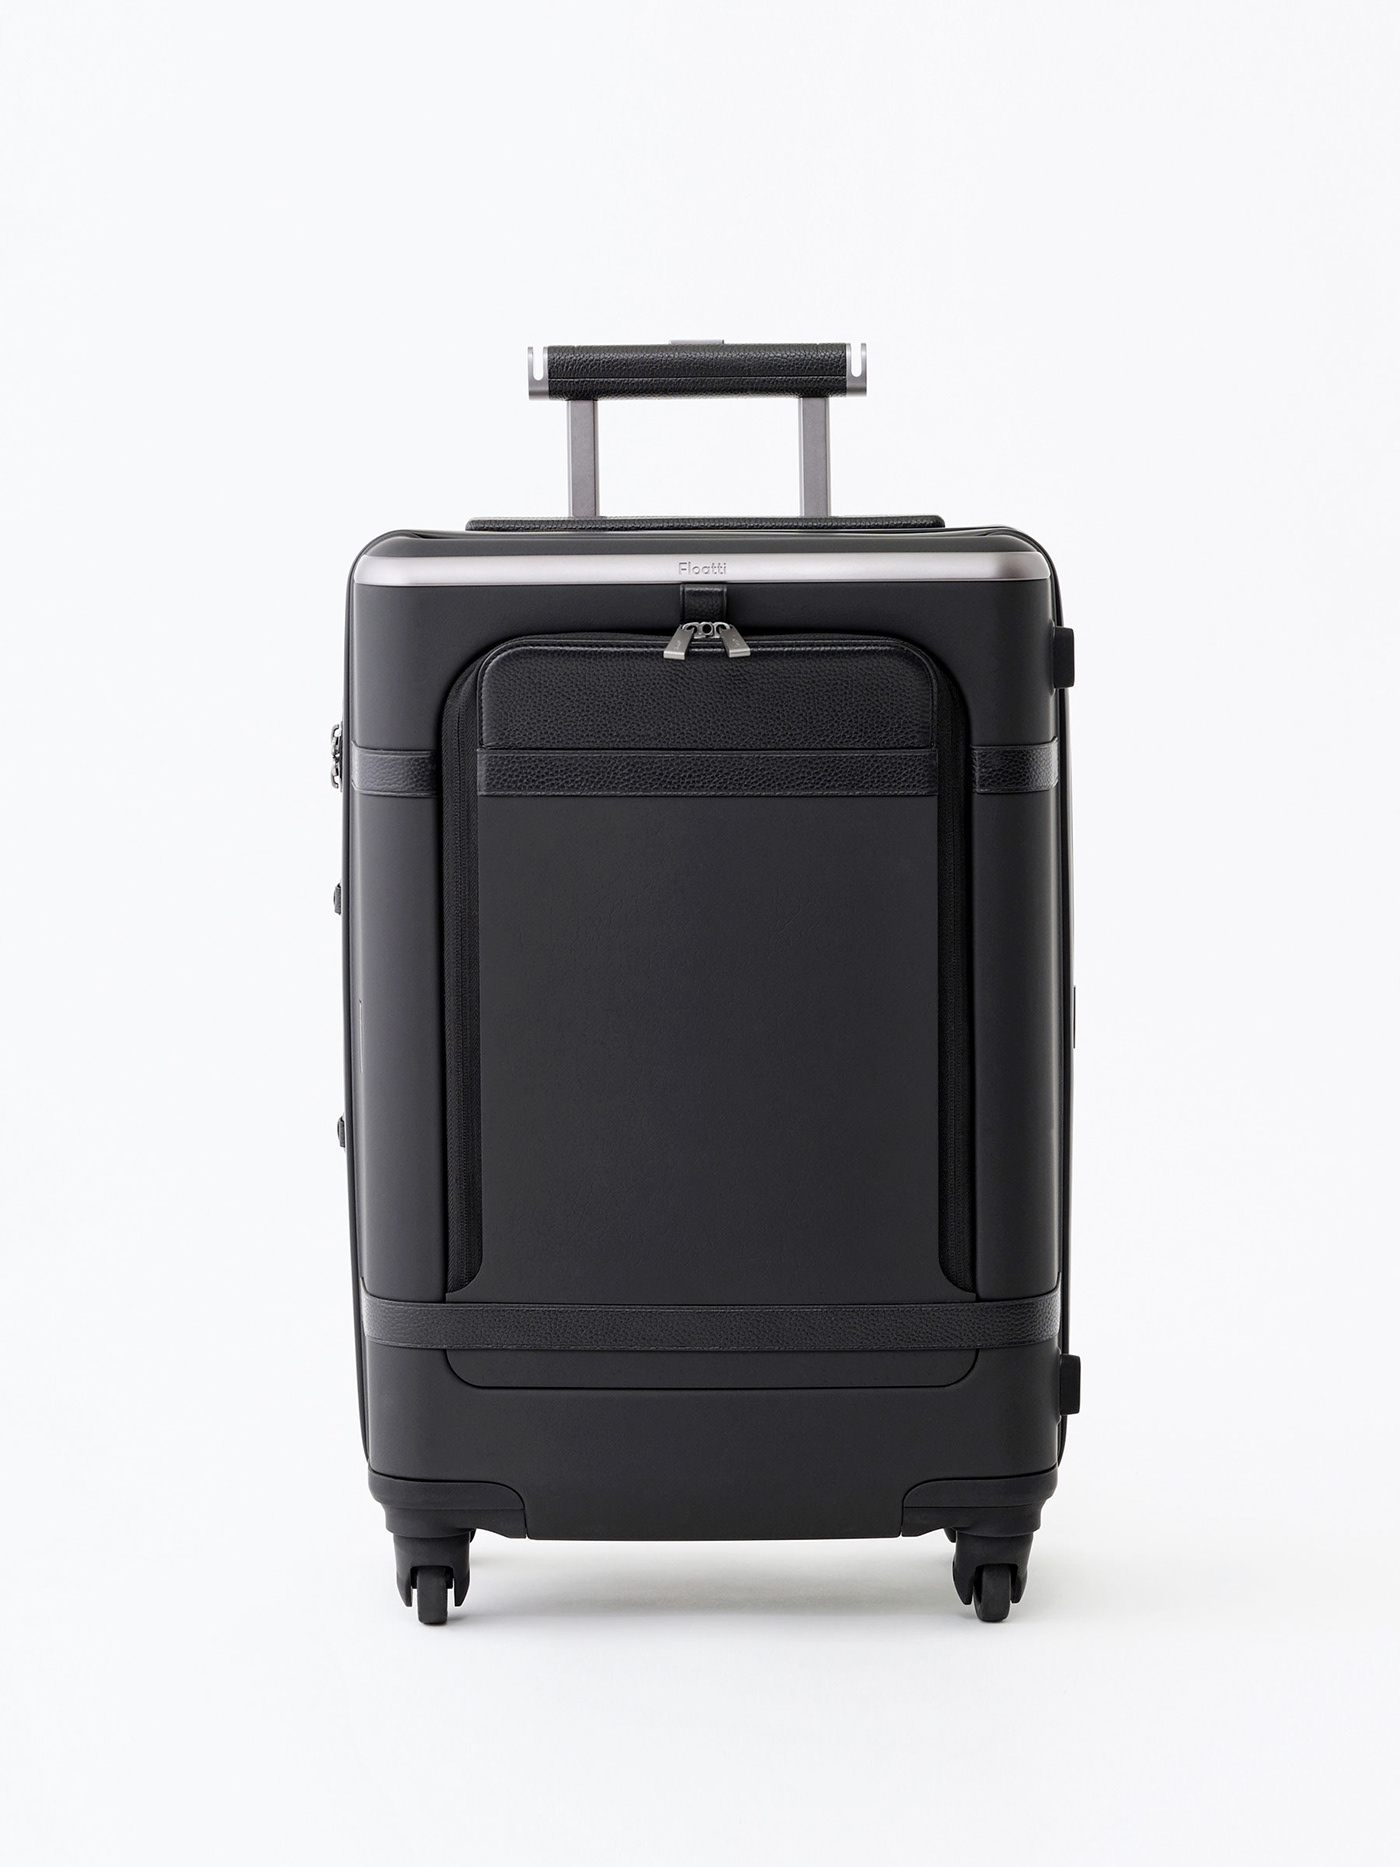 andrea ponti Floatti Smart suitcase Kickstarter luggage bag Travel leather polycarbonate design product industrial